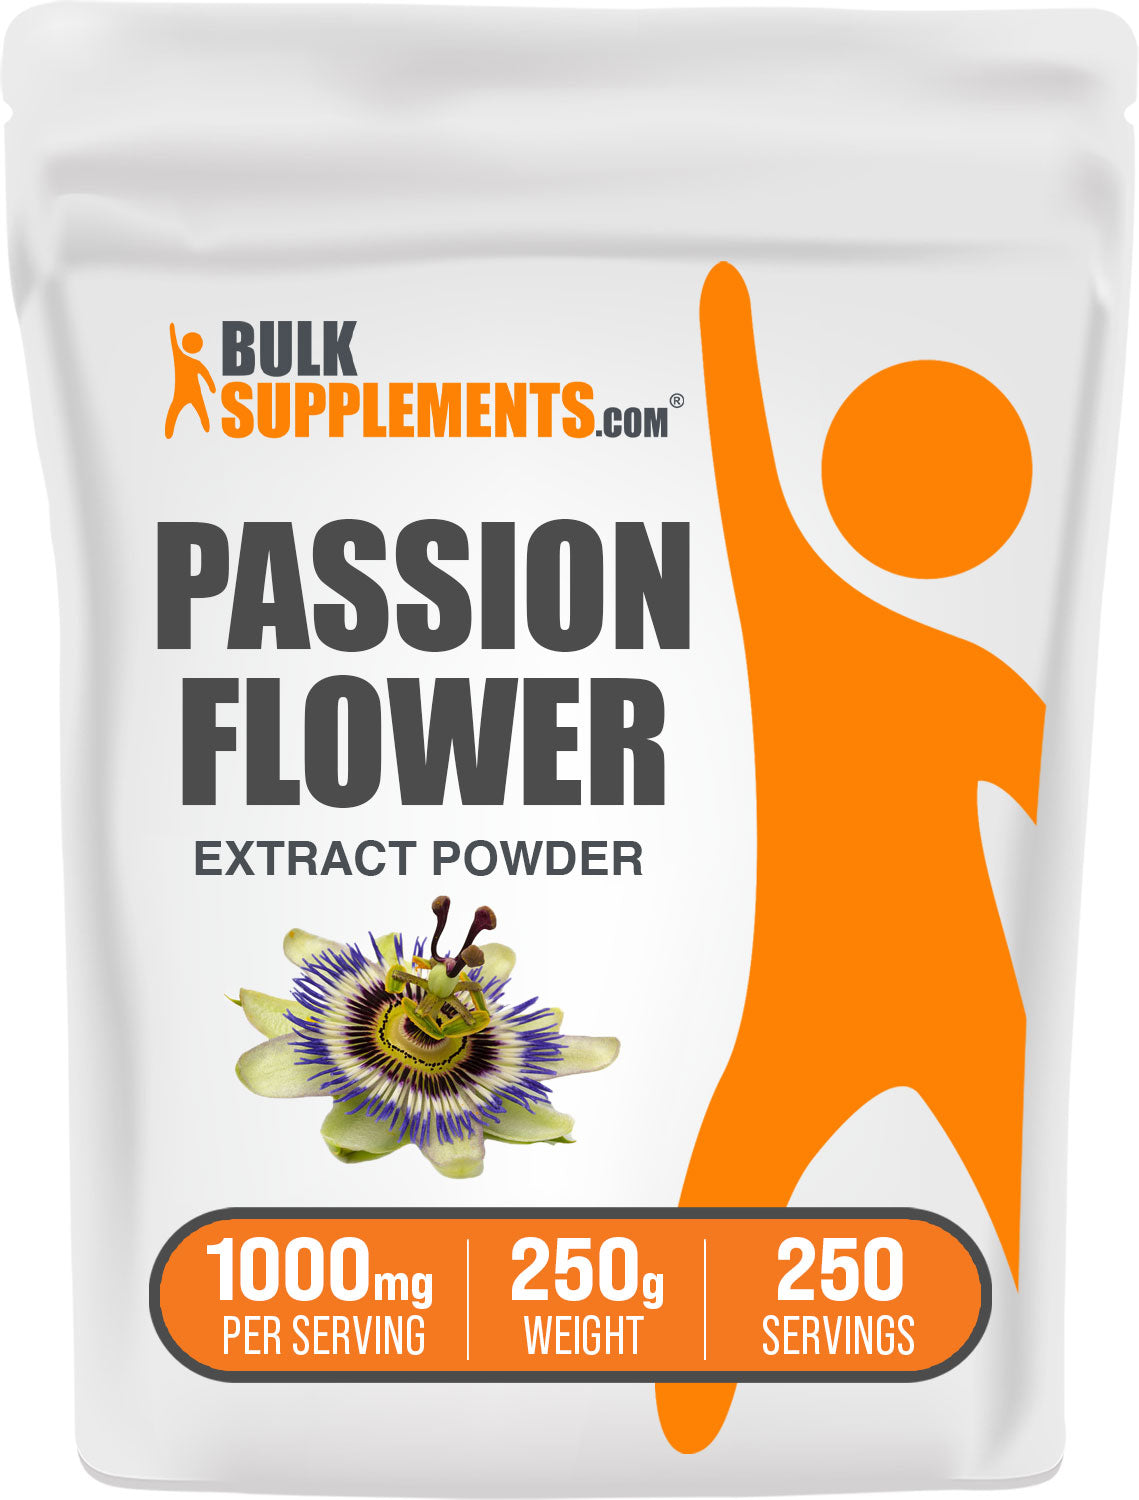 BulkSupplements.com Passion Flower Extract Powder 250g Bag